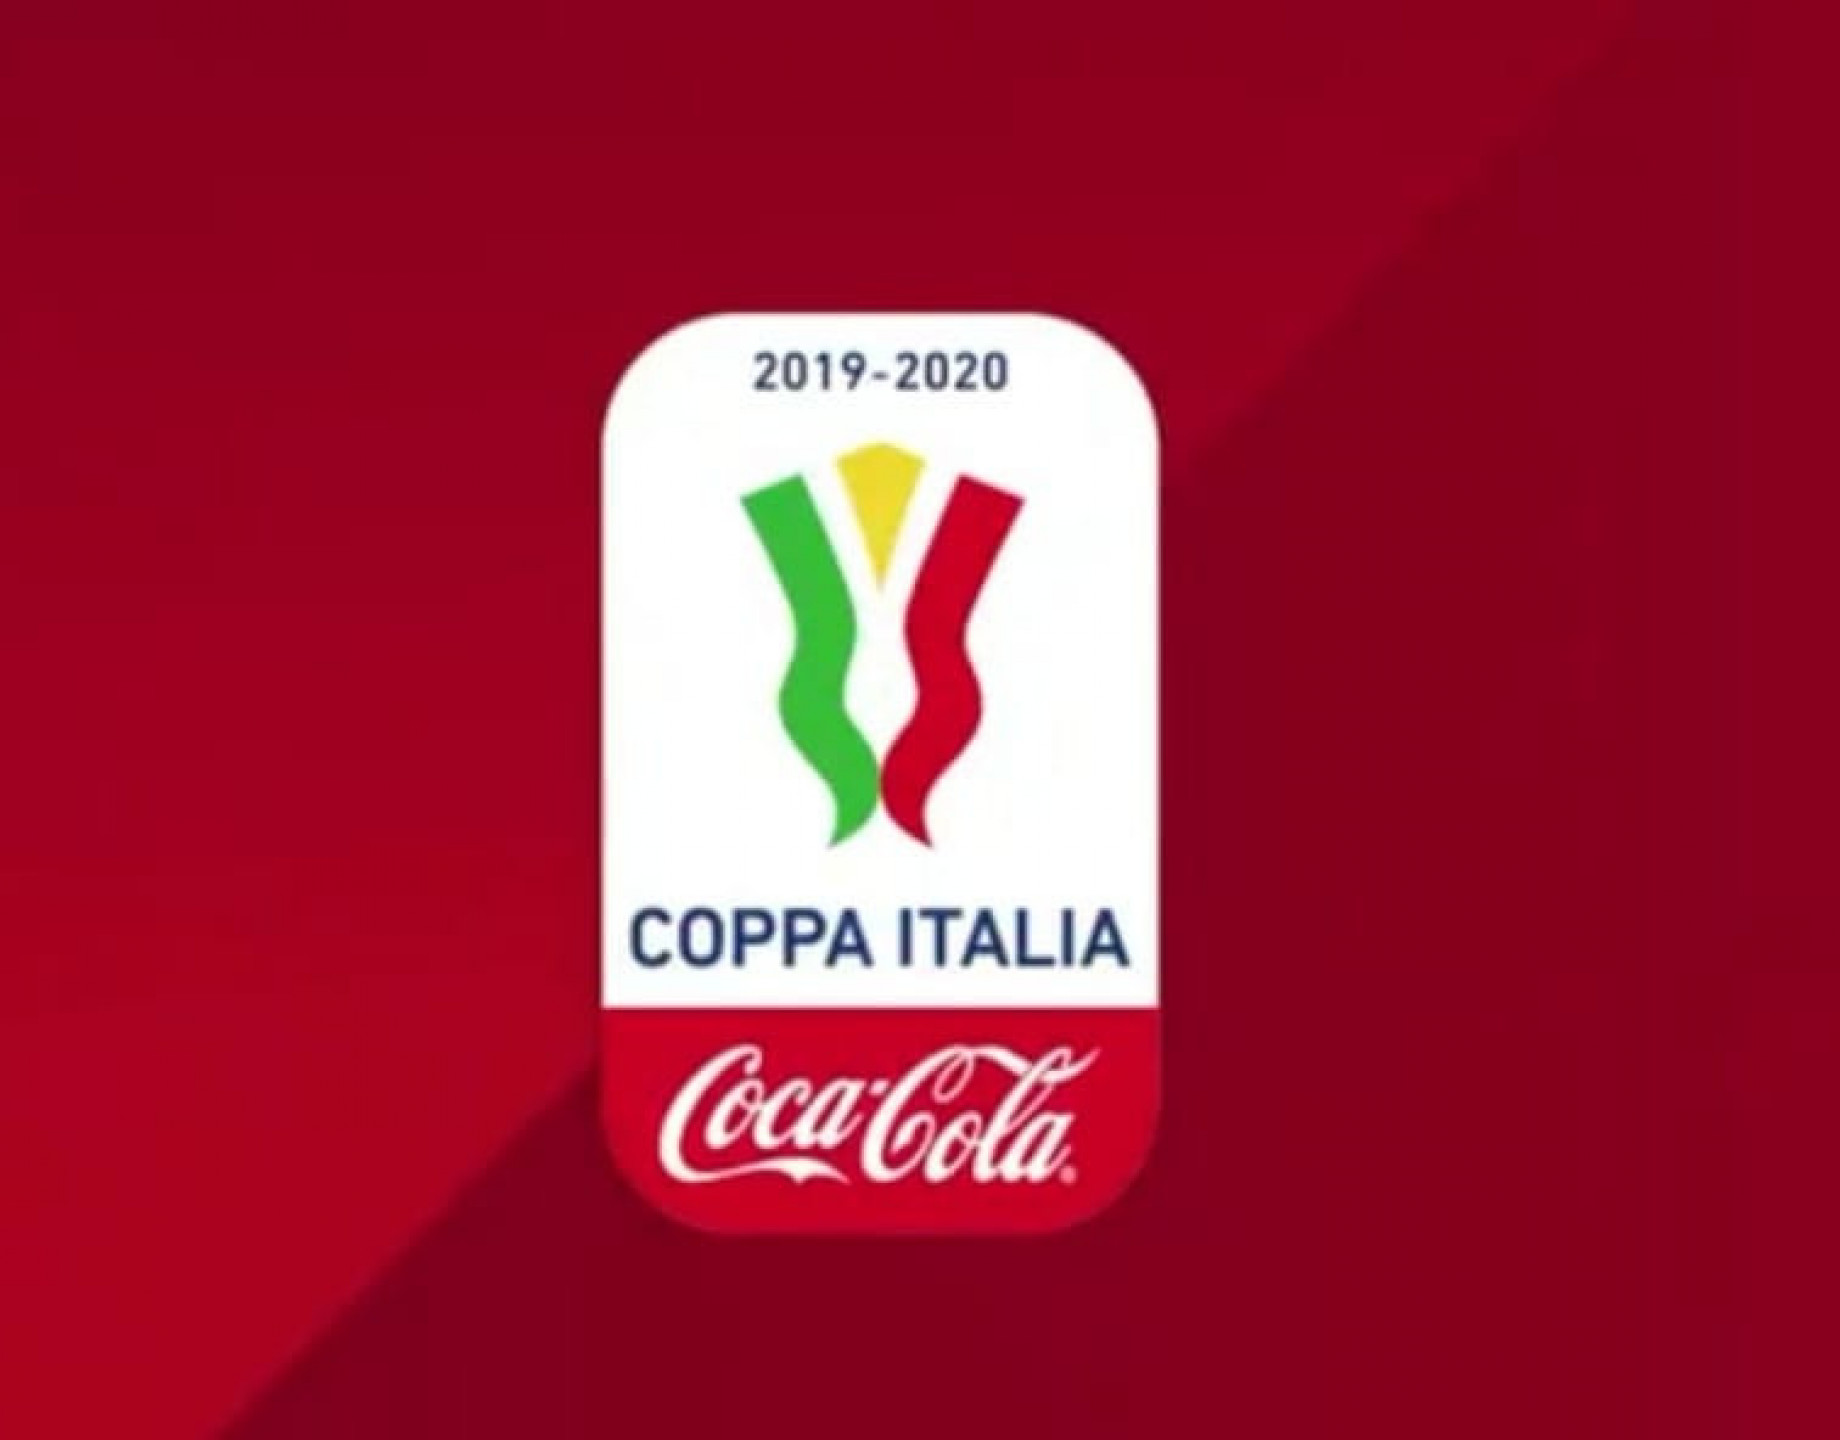 coppa italia logo coca cola gdm.jpg